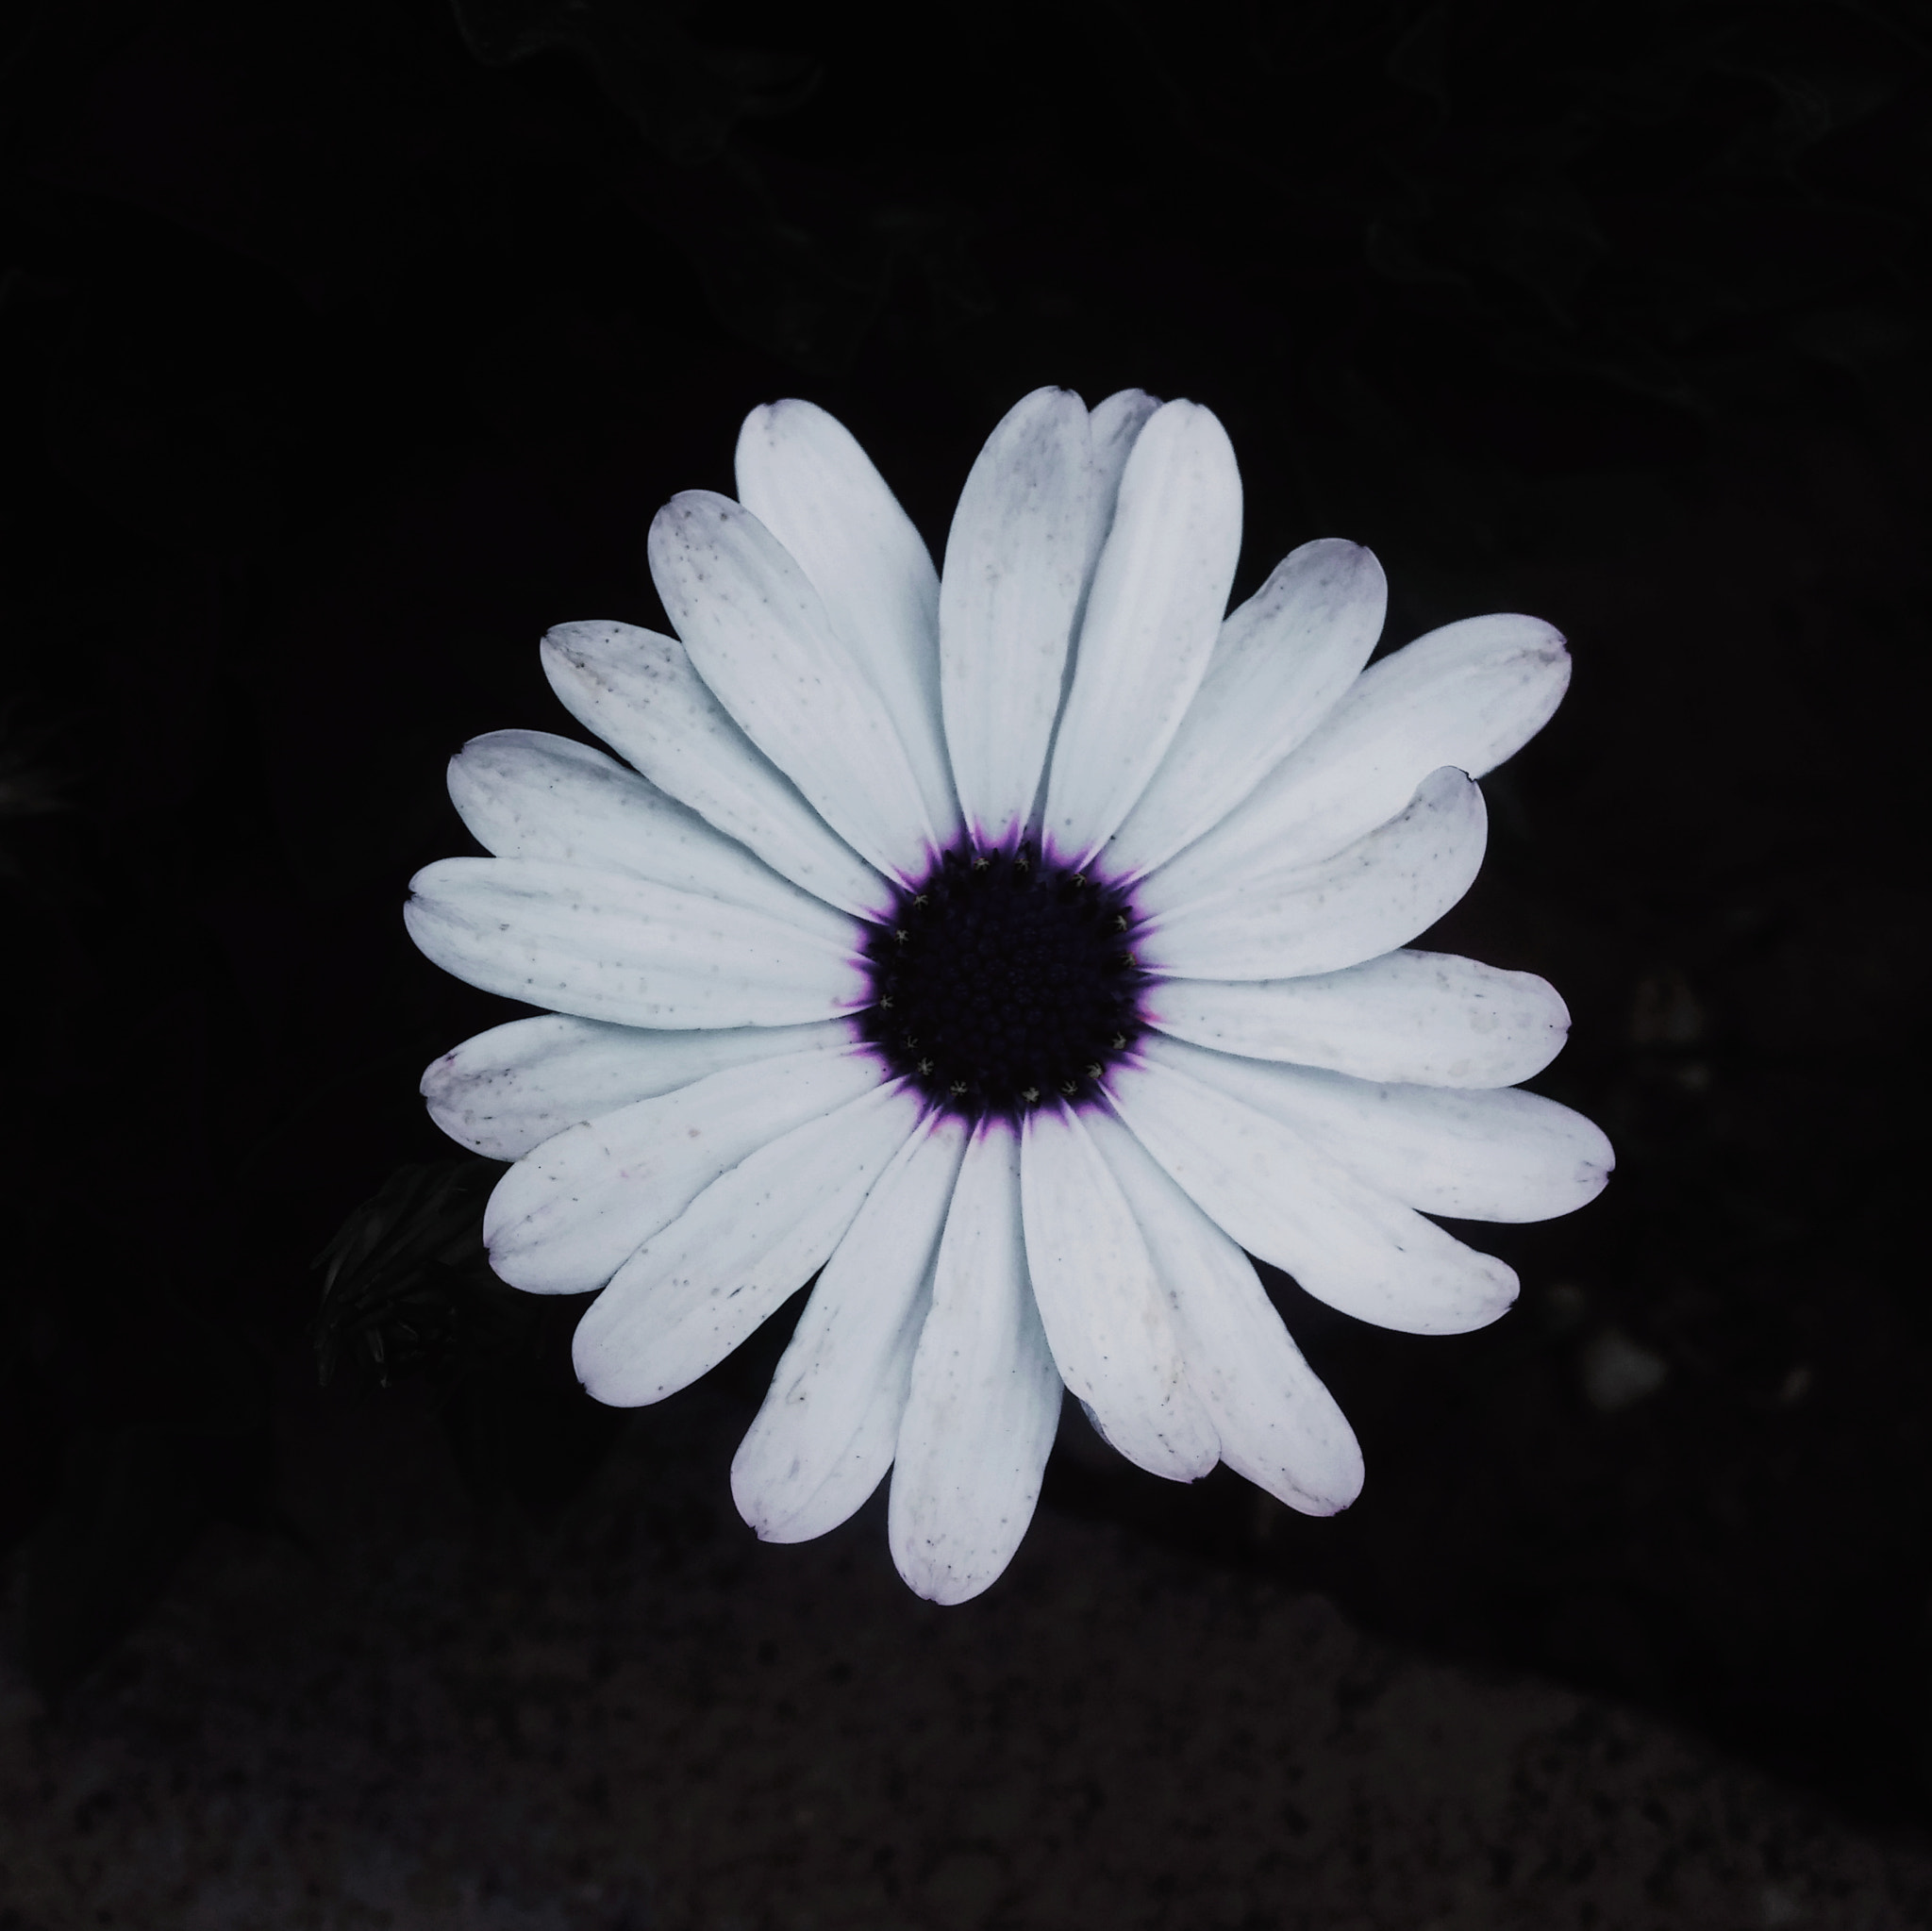 LG G2 sample photo. Flower photography